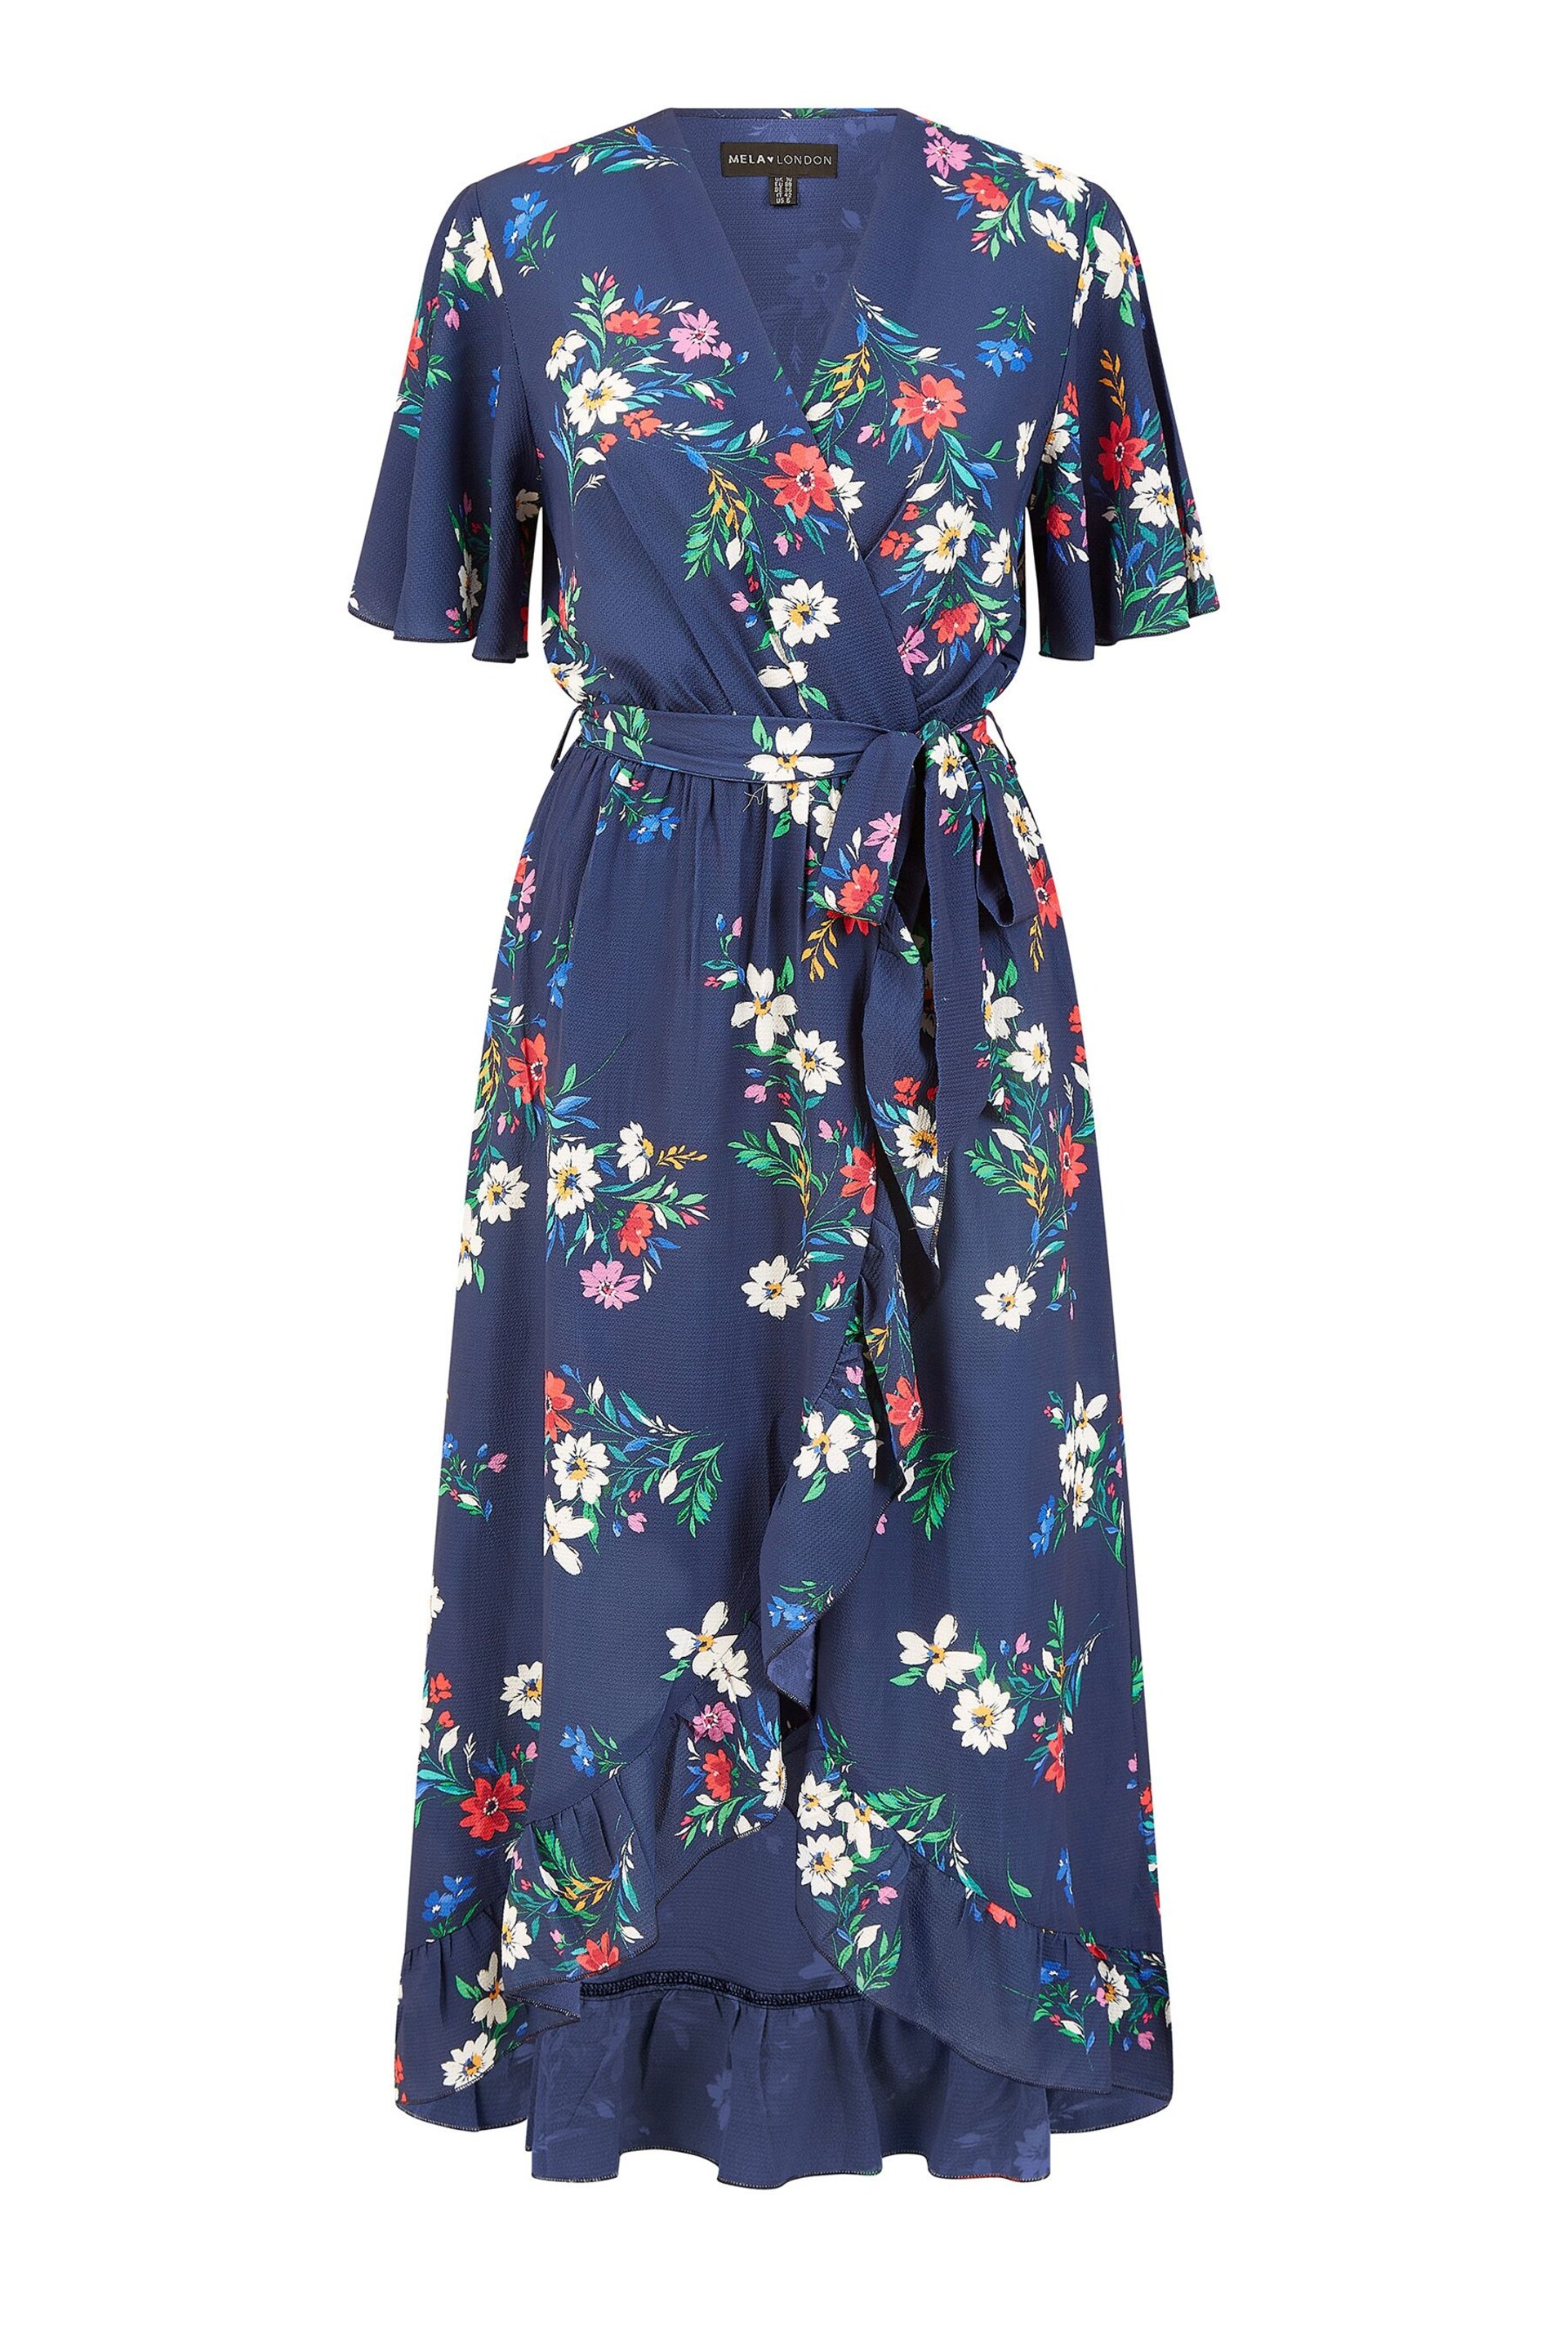 Mela Blue Floral Wrap Dress With Frill Hem - Image 4 of 4